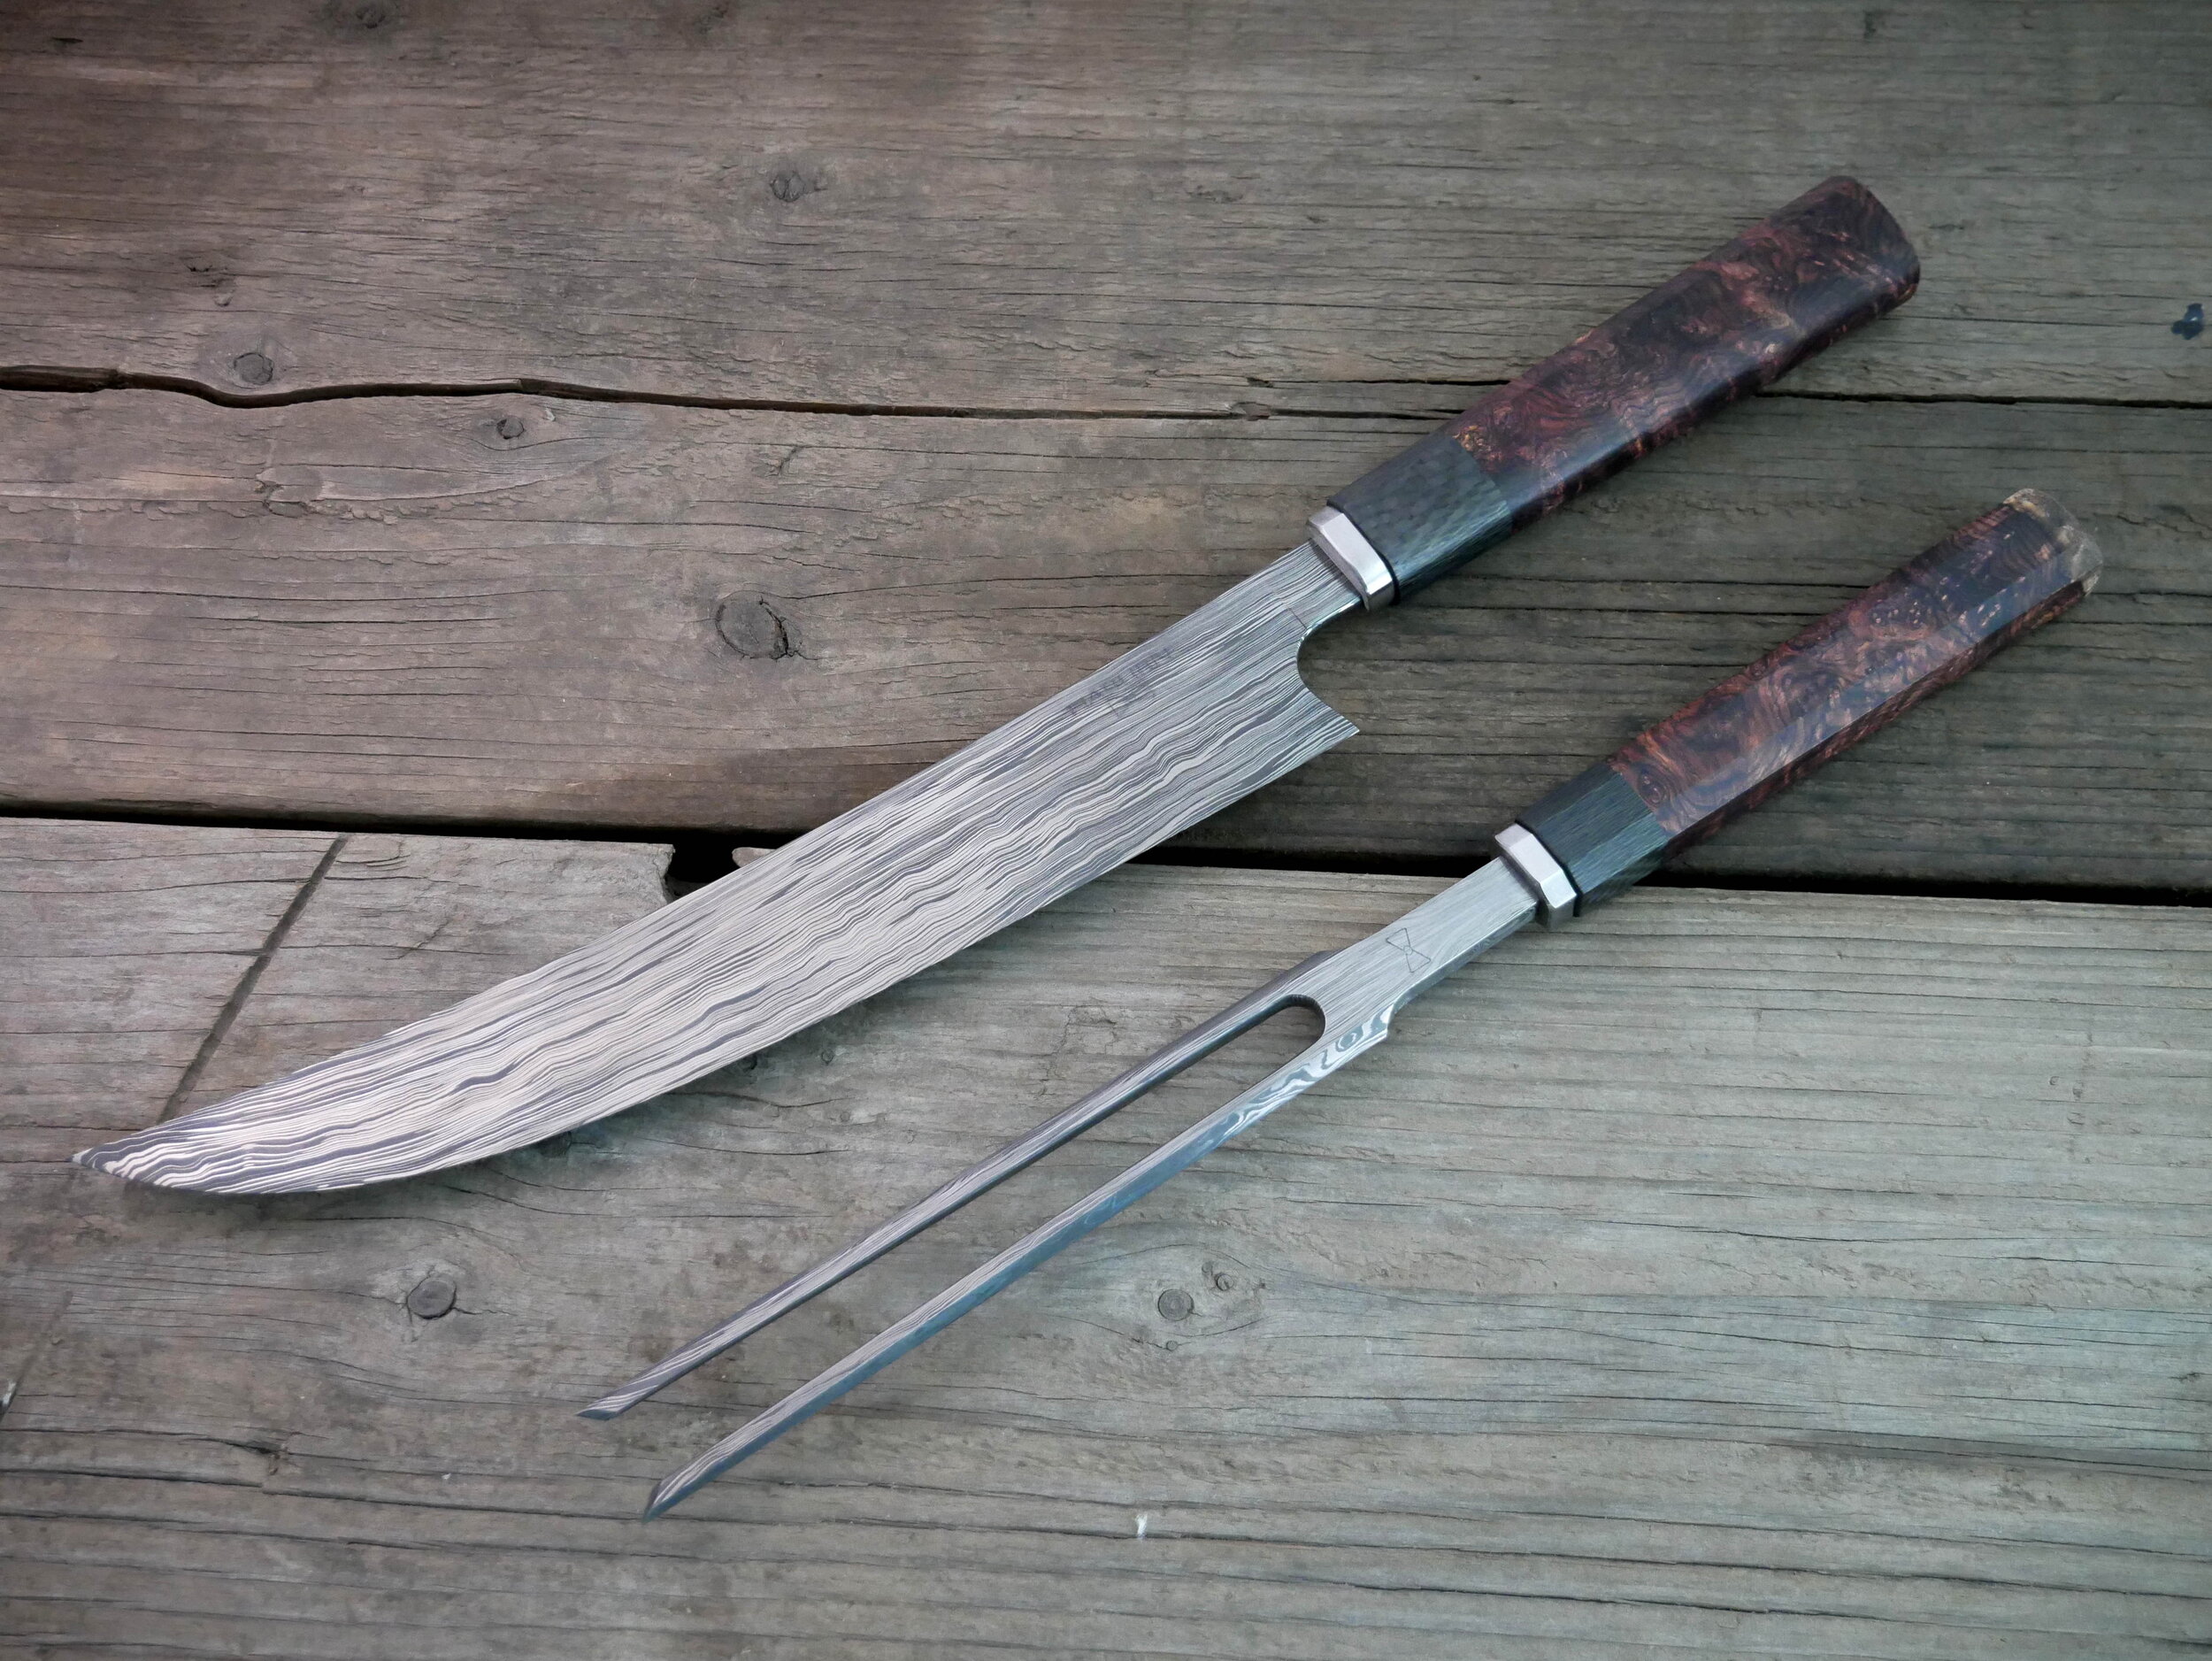 Handmade Custom Steel Kitchen Knives Set with Camel Bone - Inspire